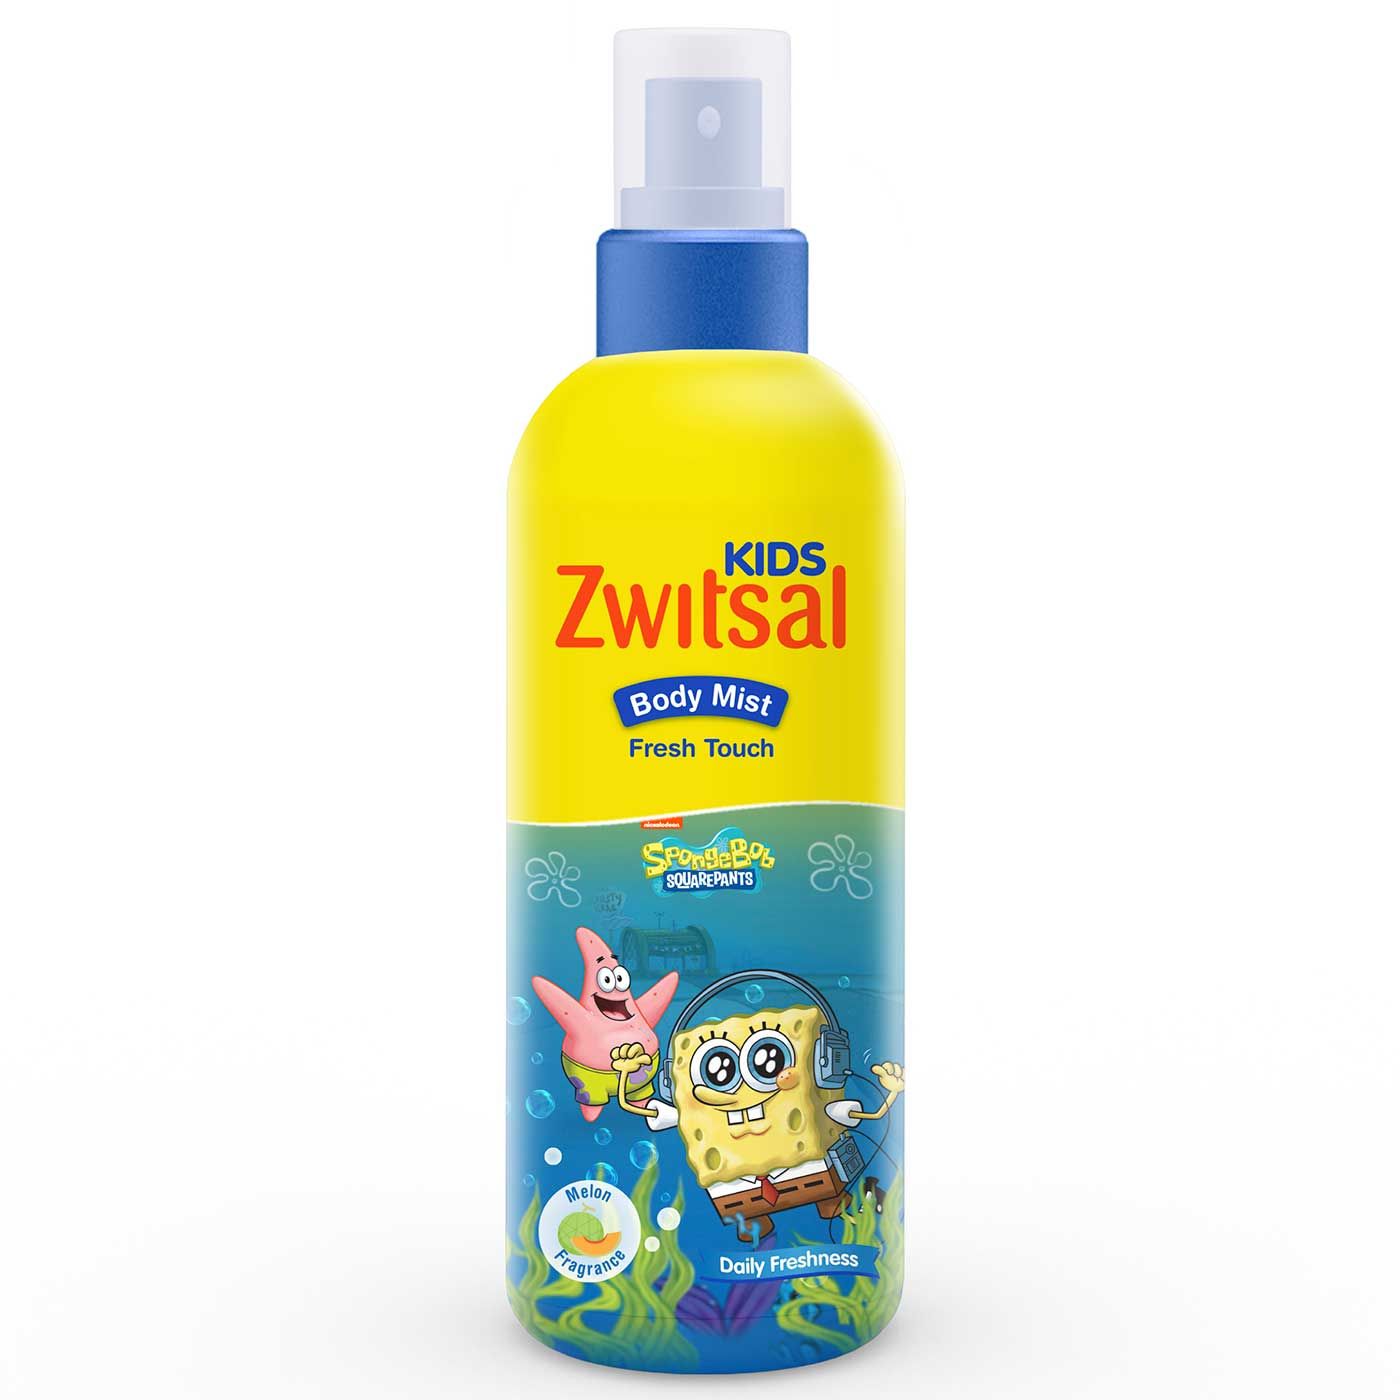 Zwitsal Kids Body Mist Fresh Touch 100ml - 3